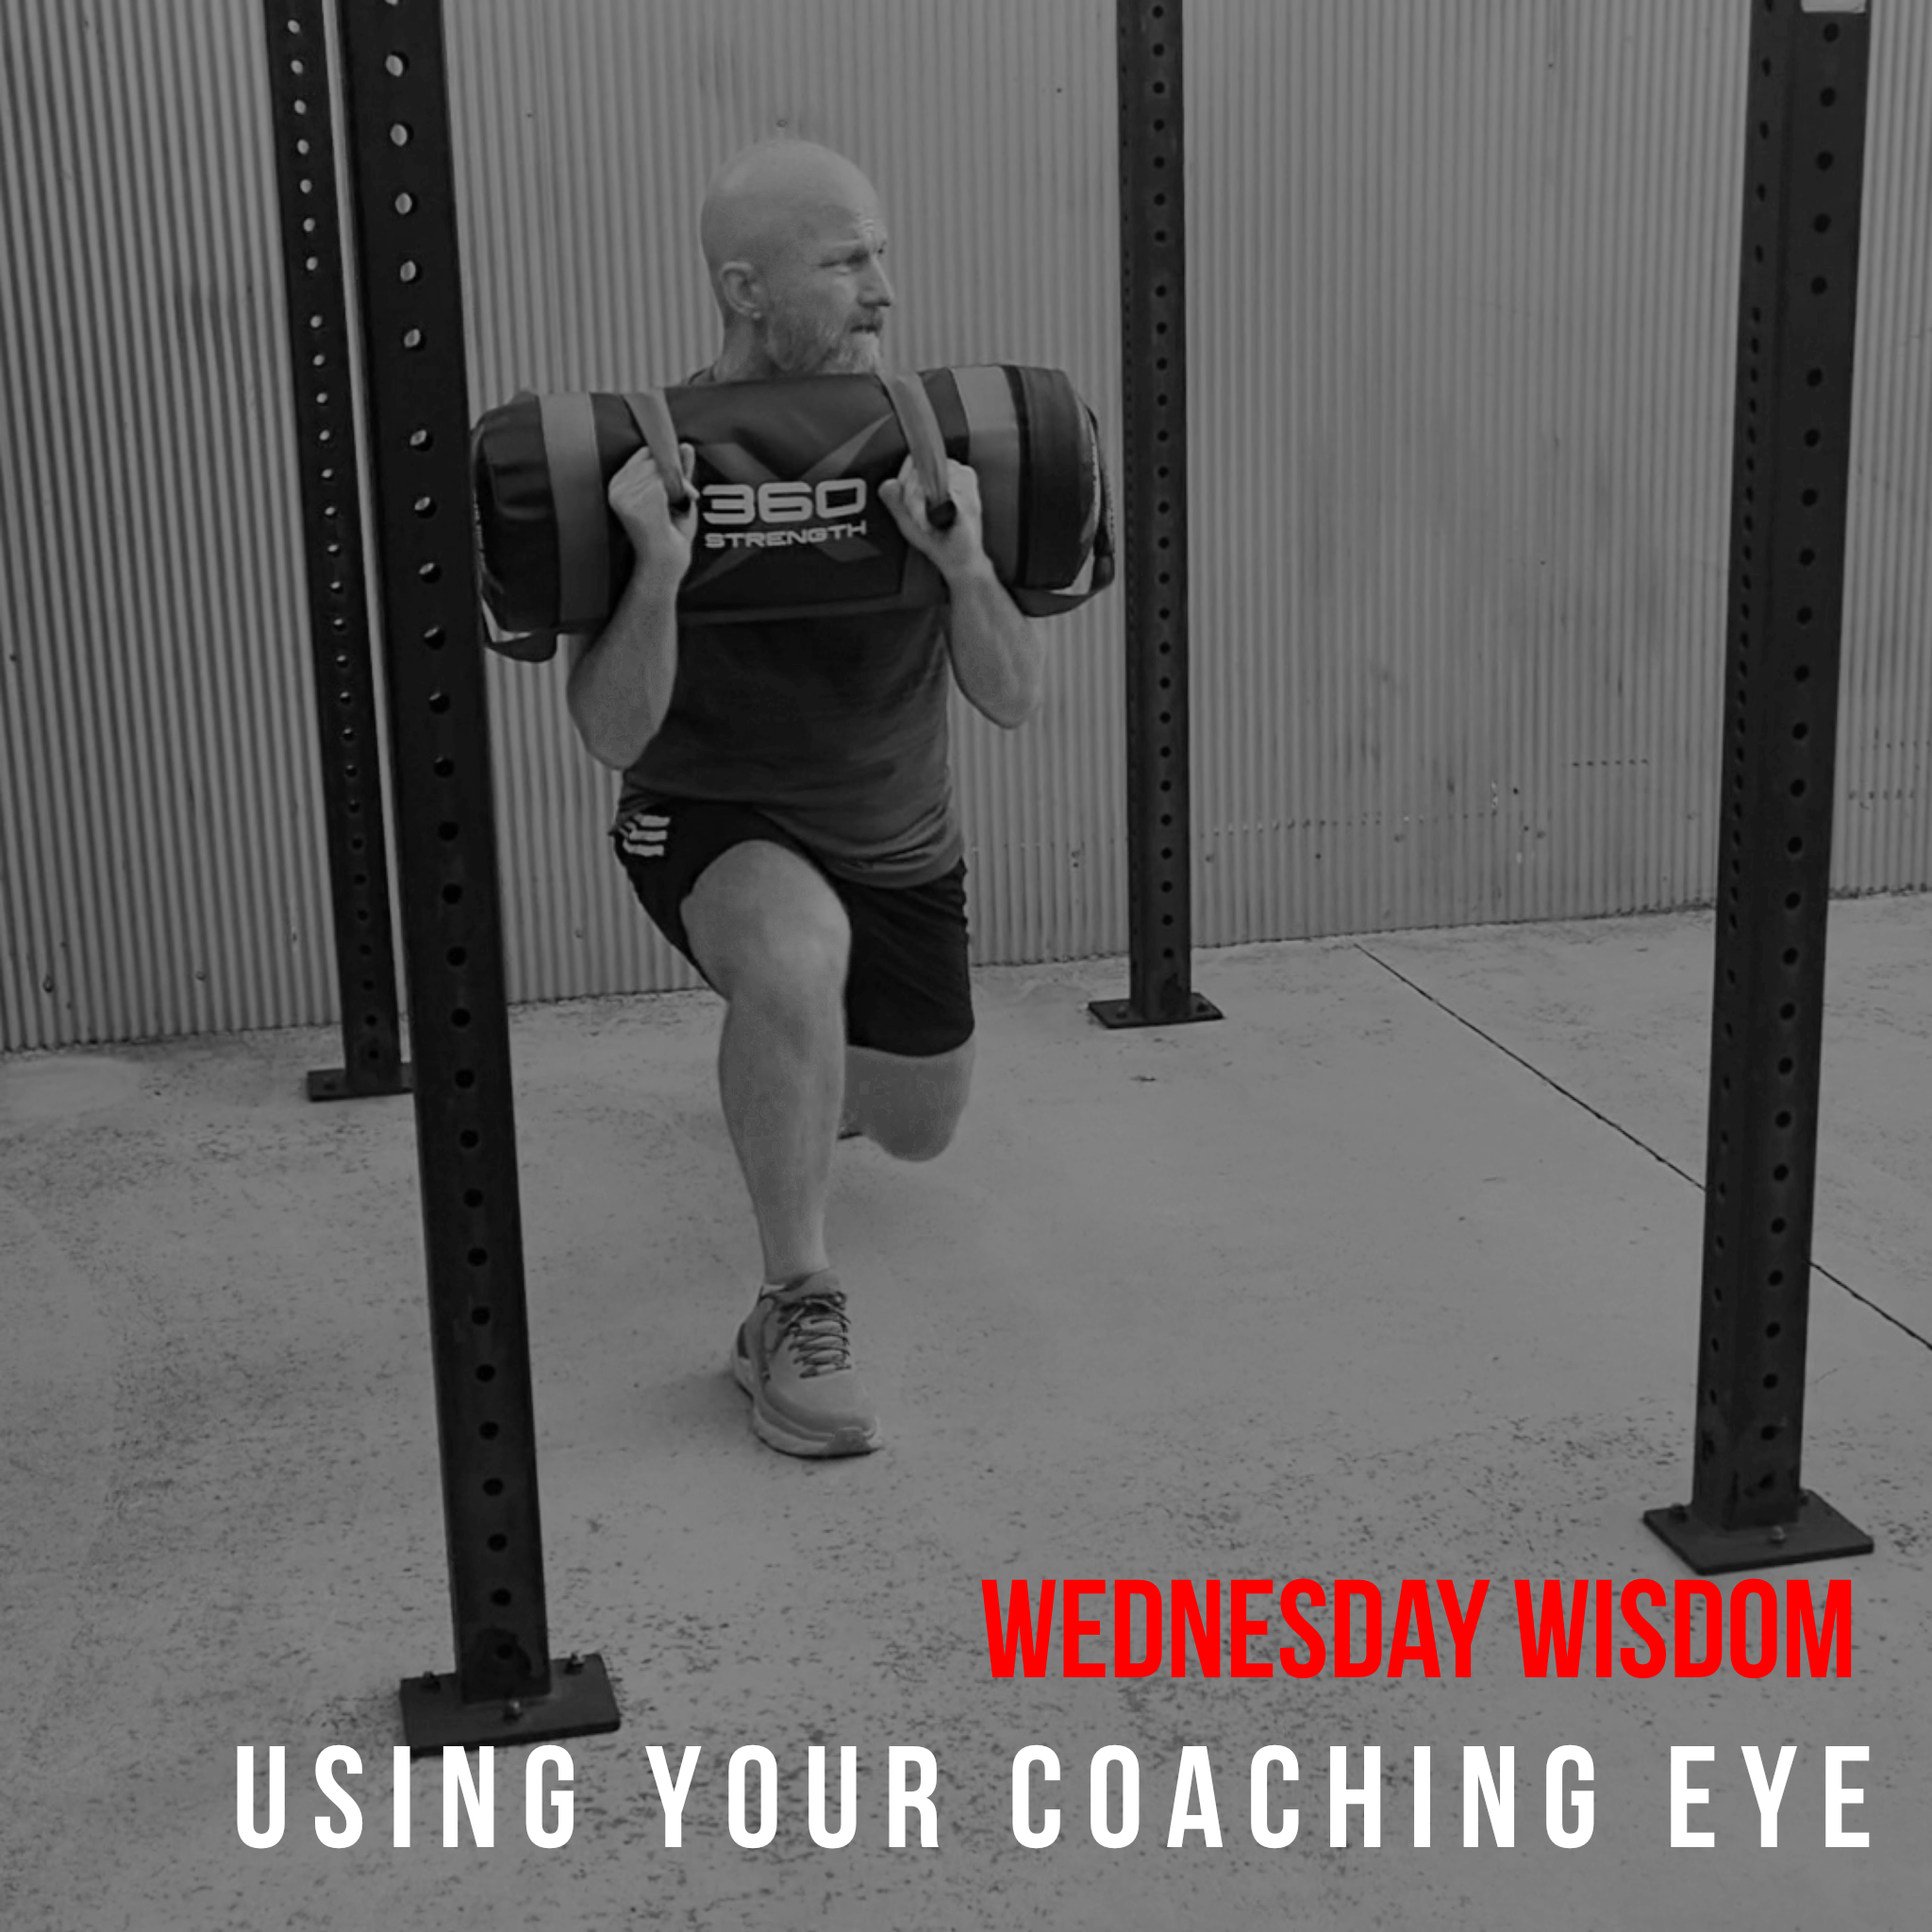 WEDNESDAY WISDOM: Using Your Coaching Eye